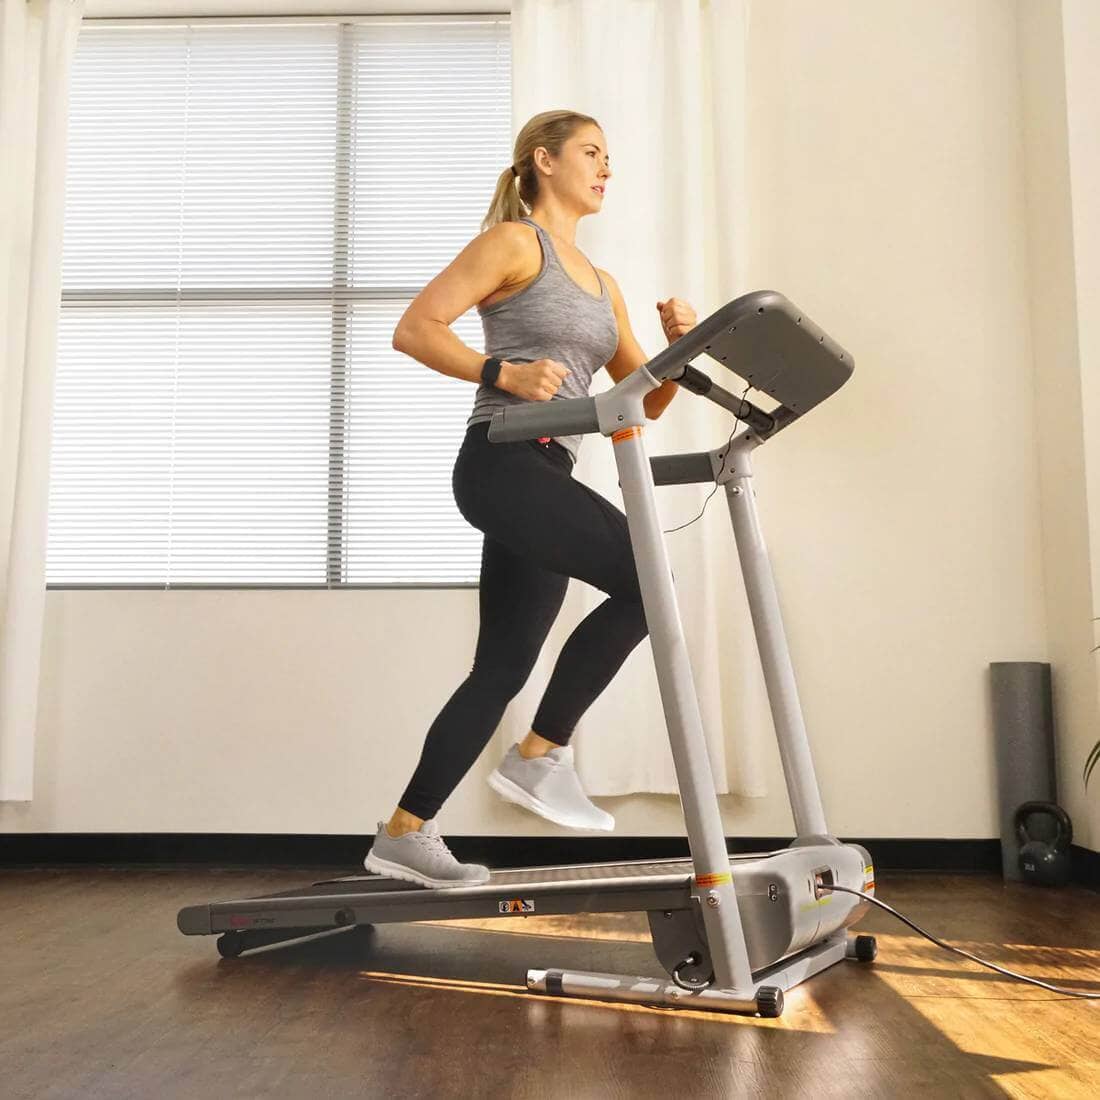 Sunny Health Fitness Compact Treadmill-Cardio Machine for Home-Space-Saving Foldable Design